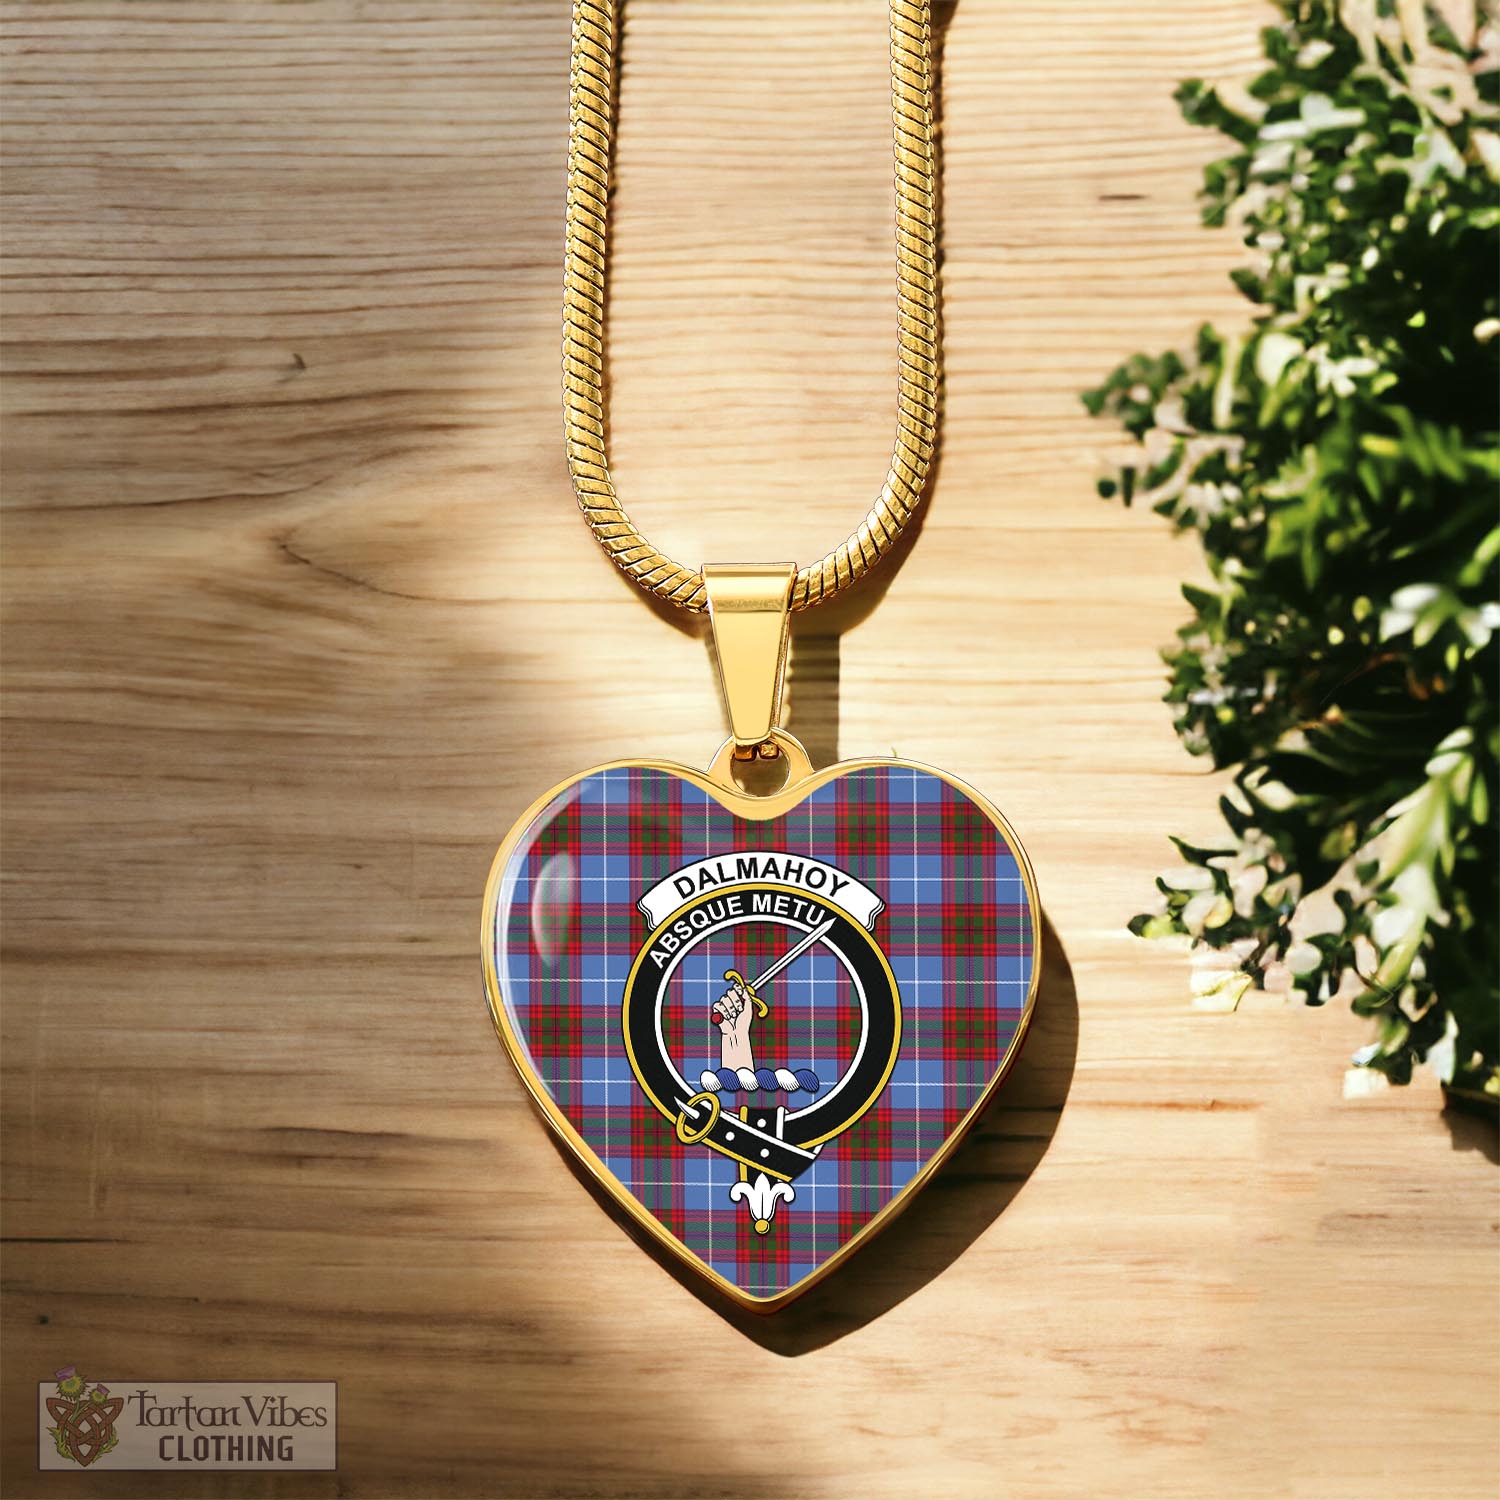 Tartan Vibes Clothing Dalmahoy Tartan Heart Necklace with Family Crest